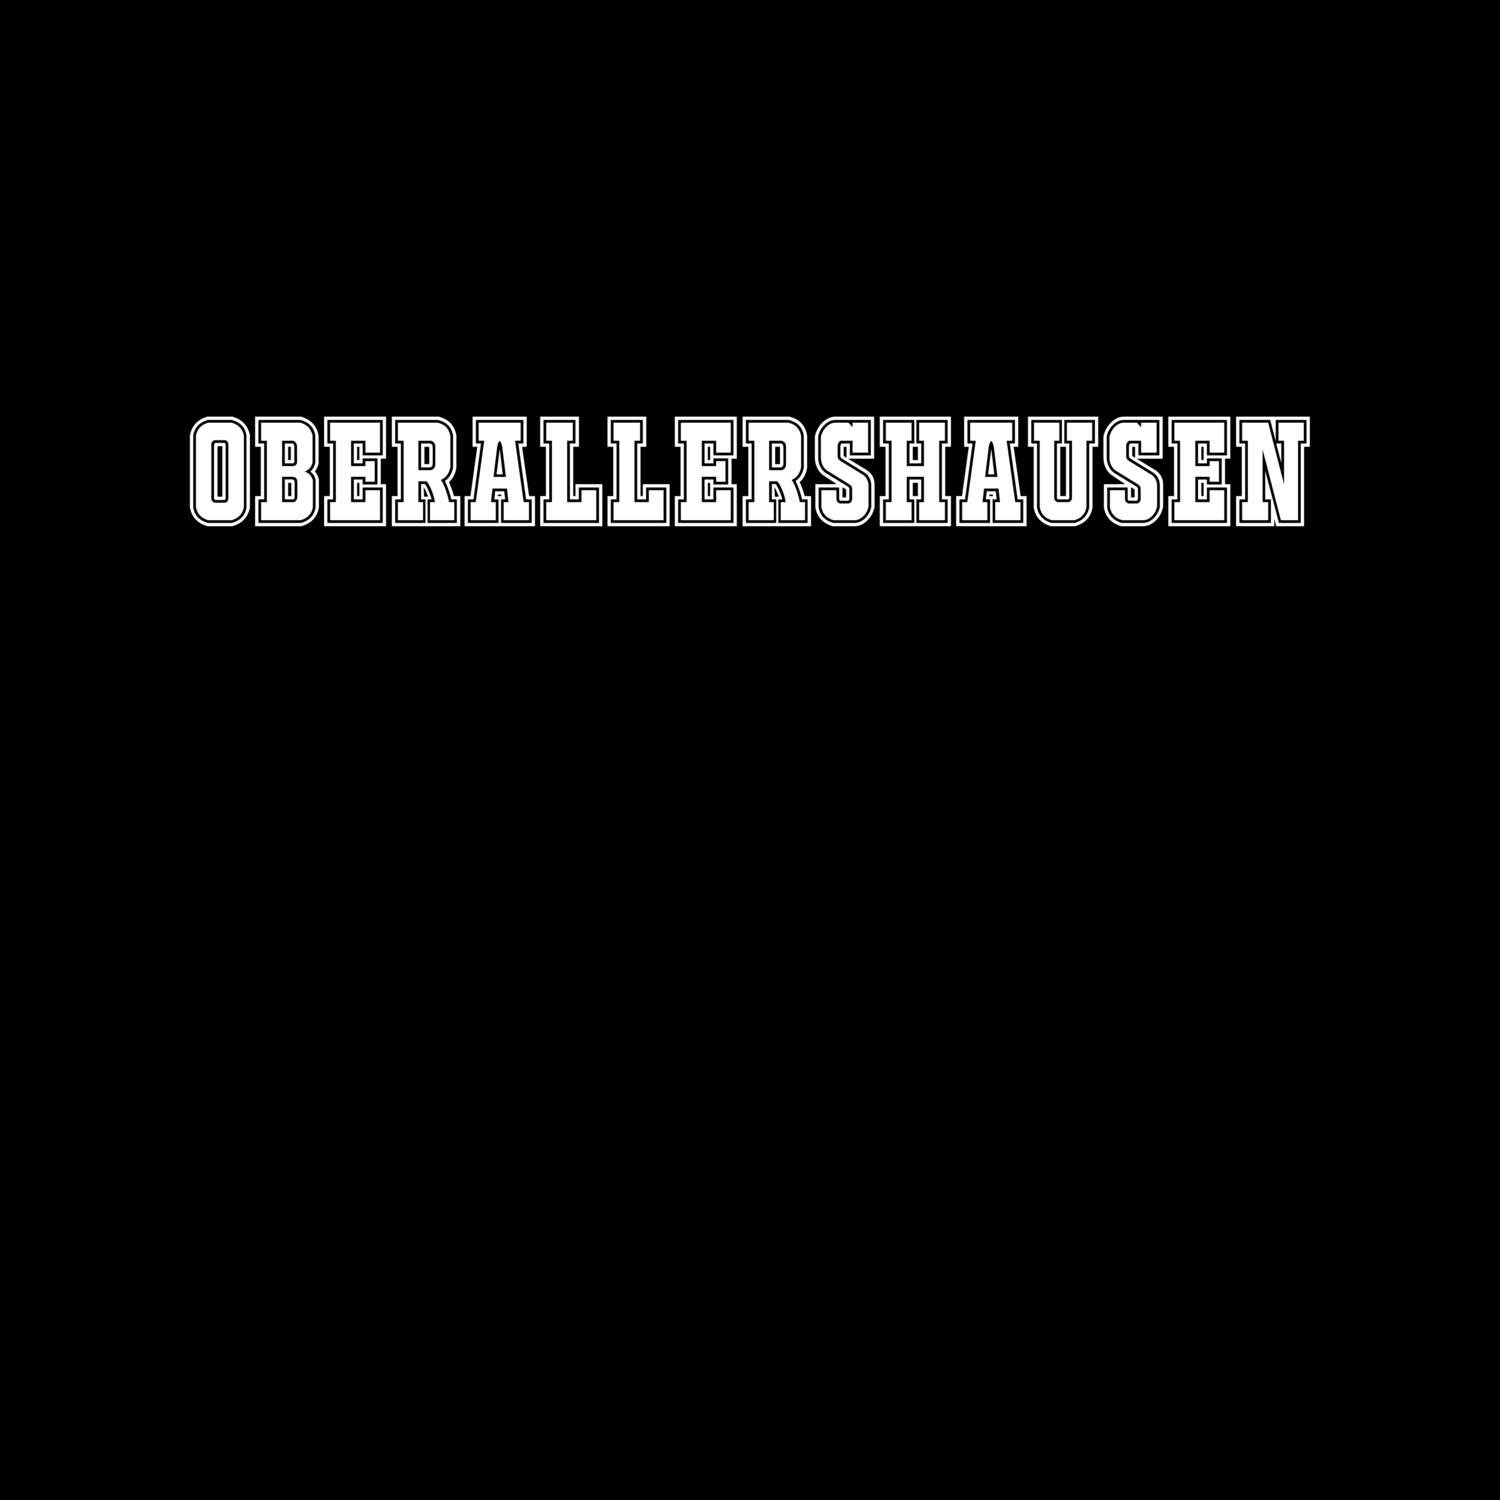 Oberallershausen T-Shirt »Classic«